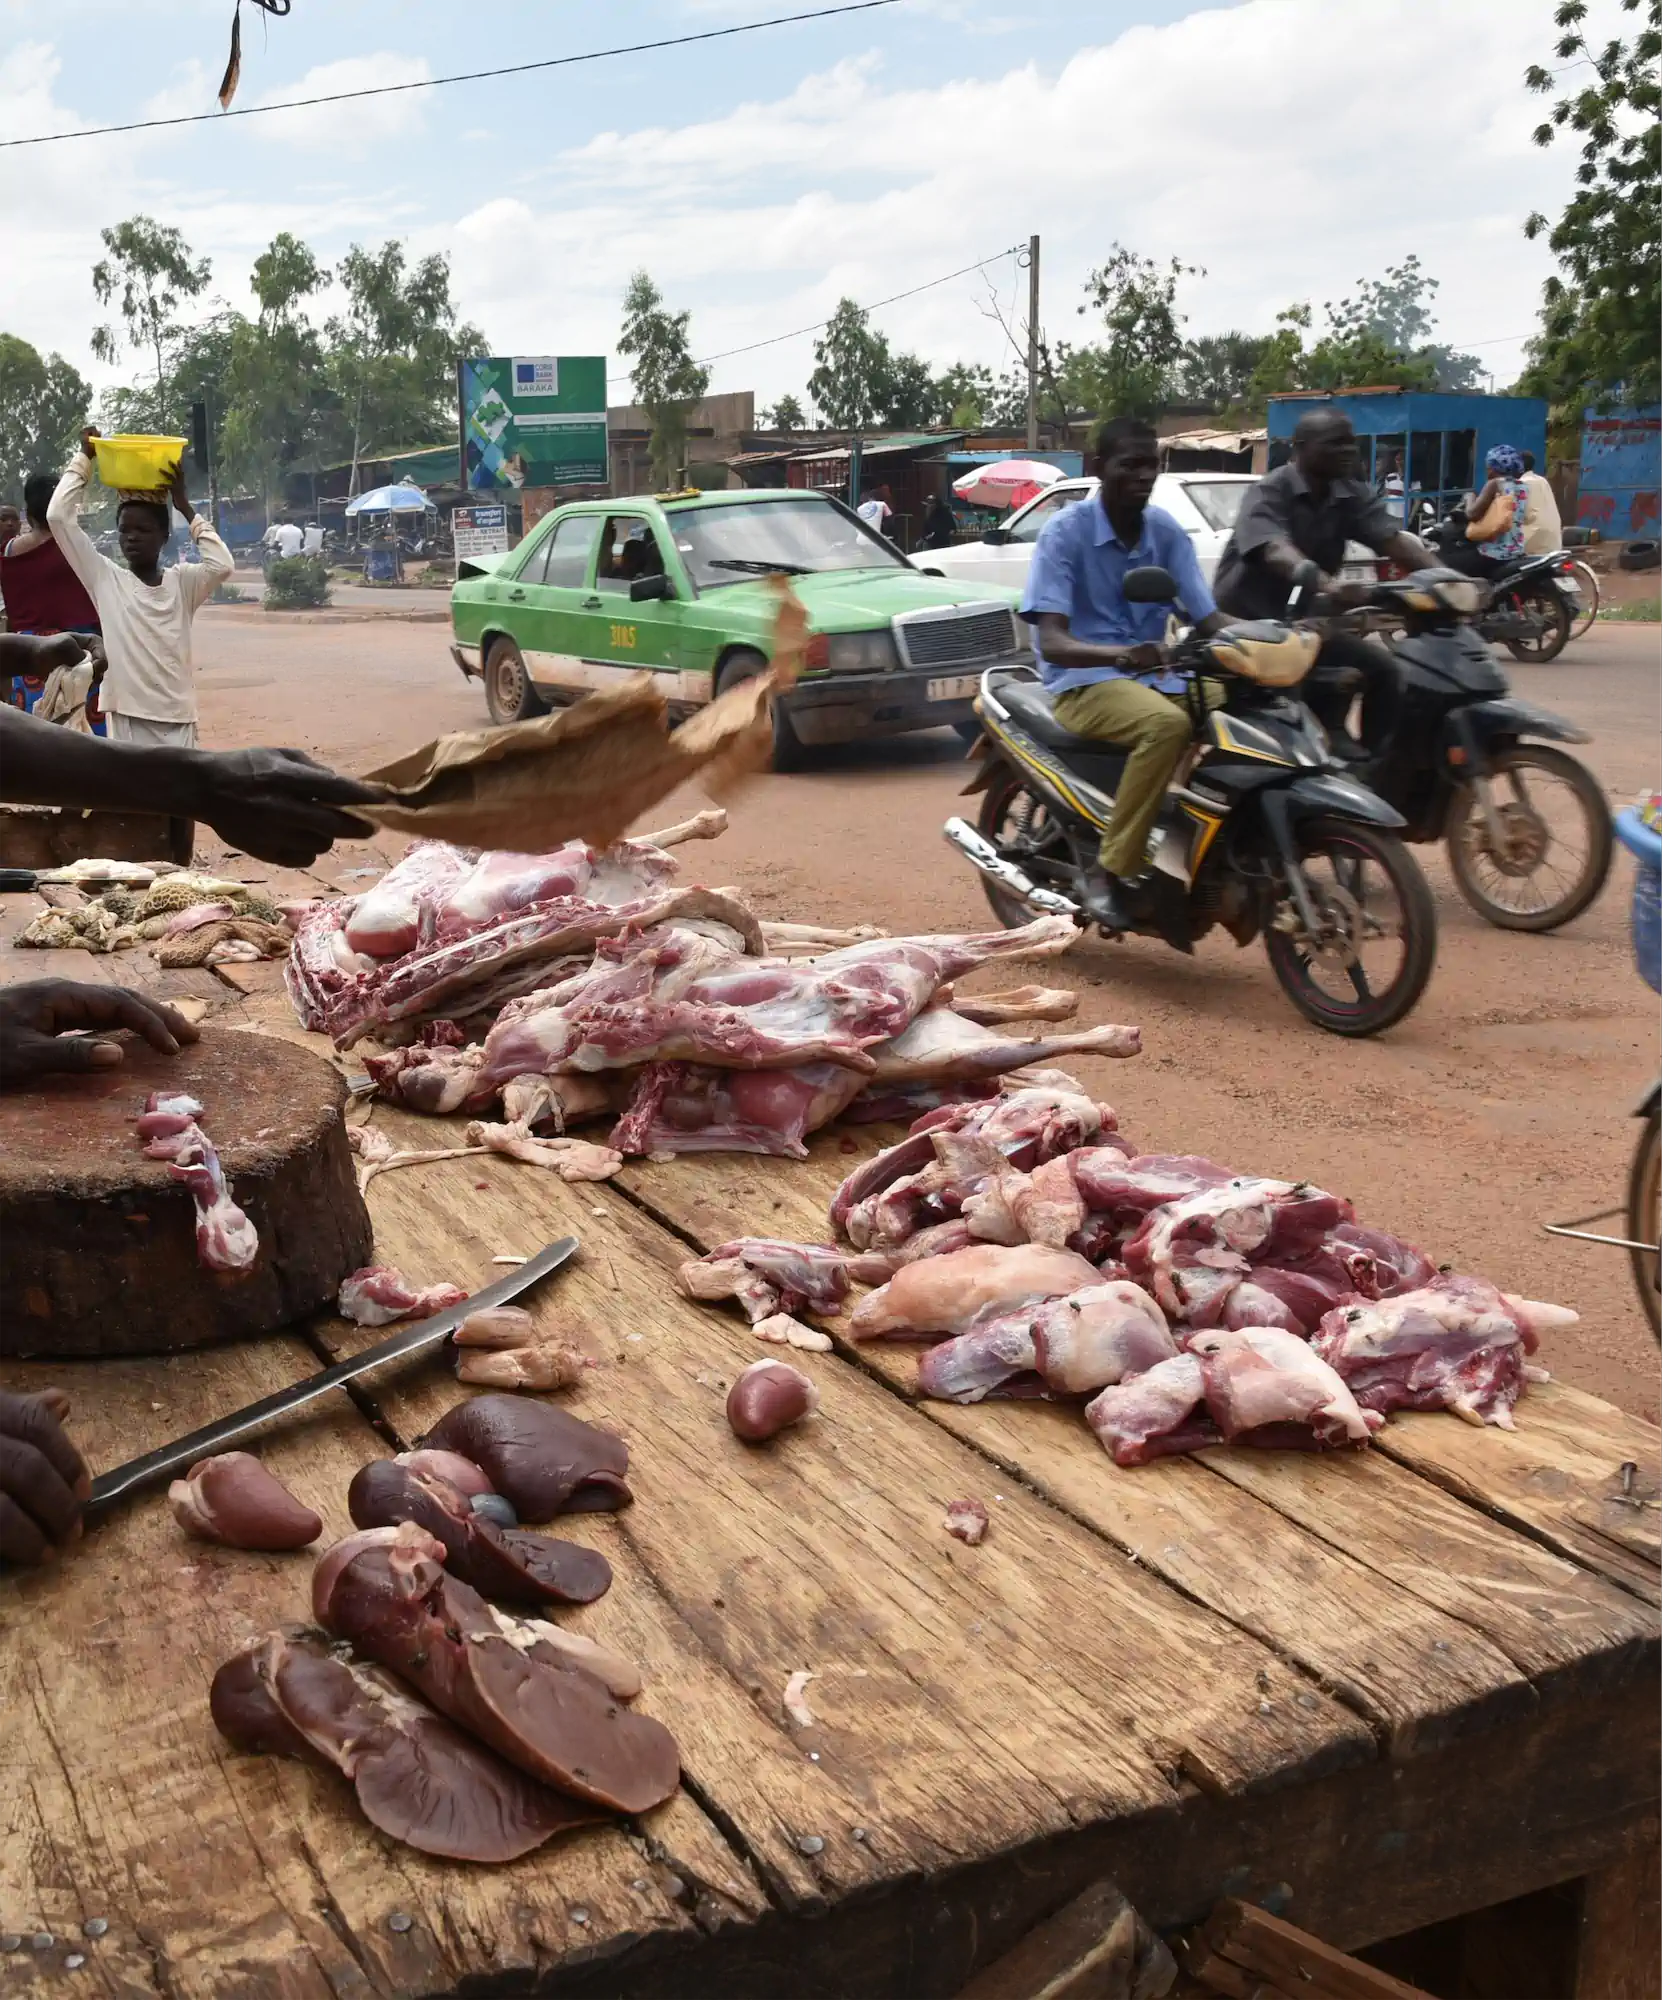 Butchers working beside a street in Ouagadougou